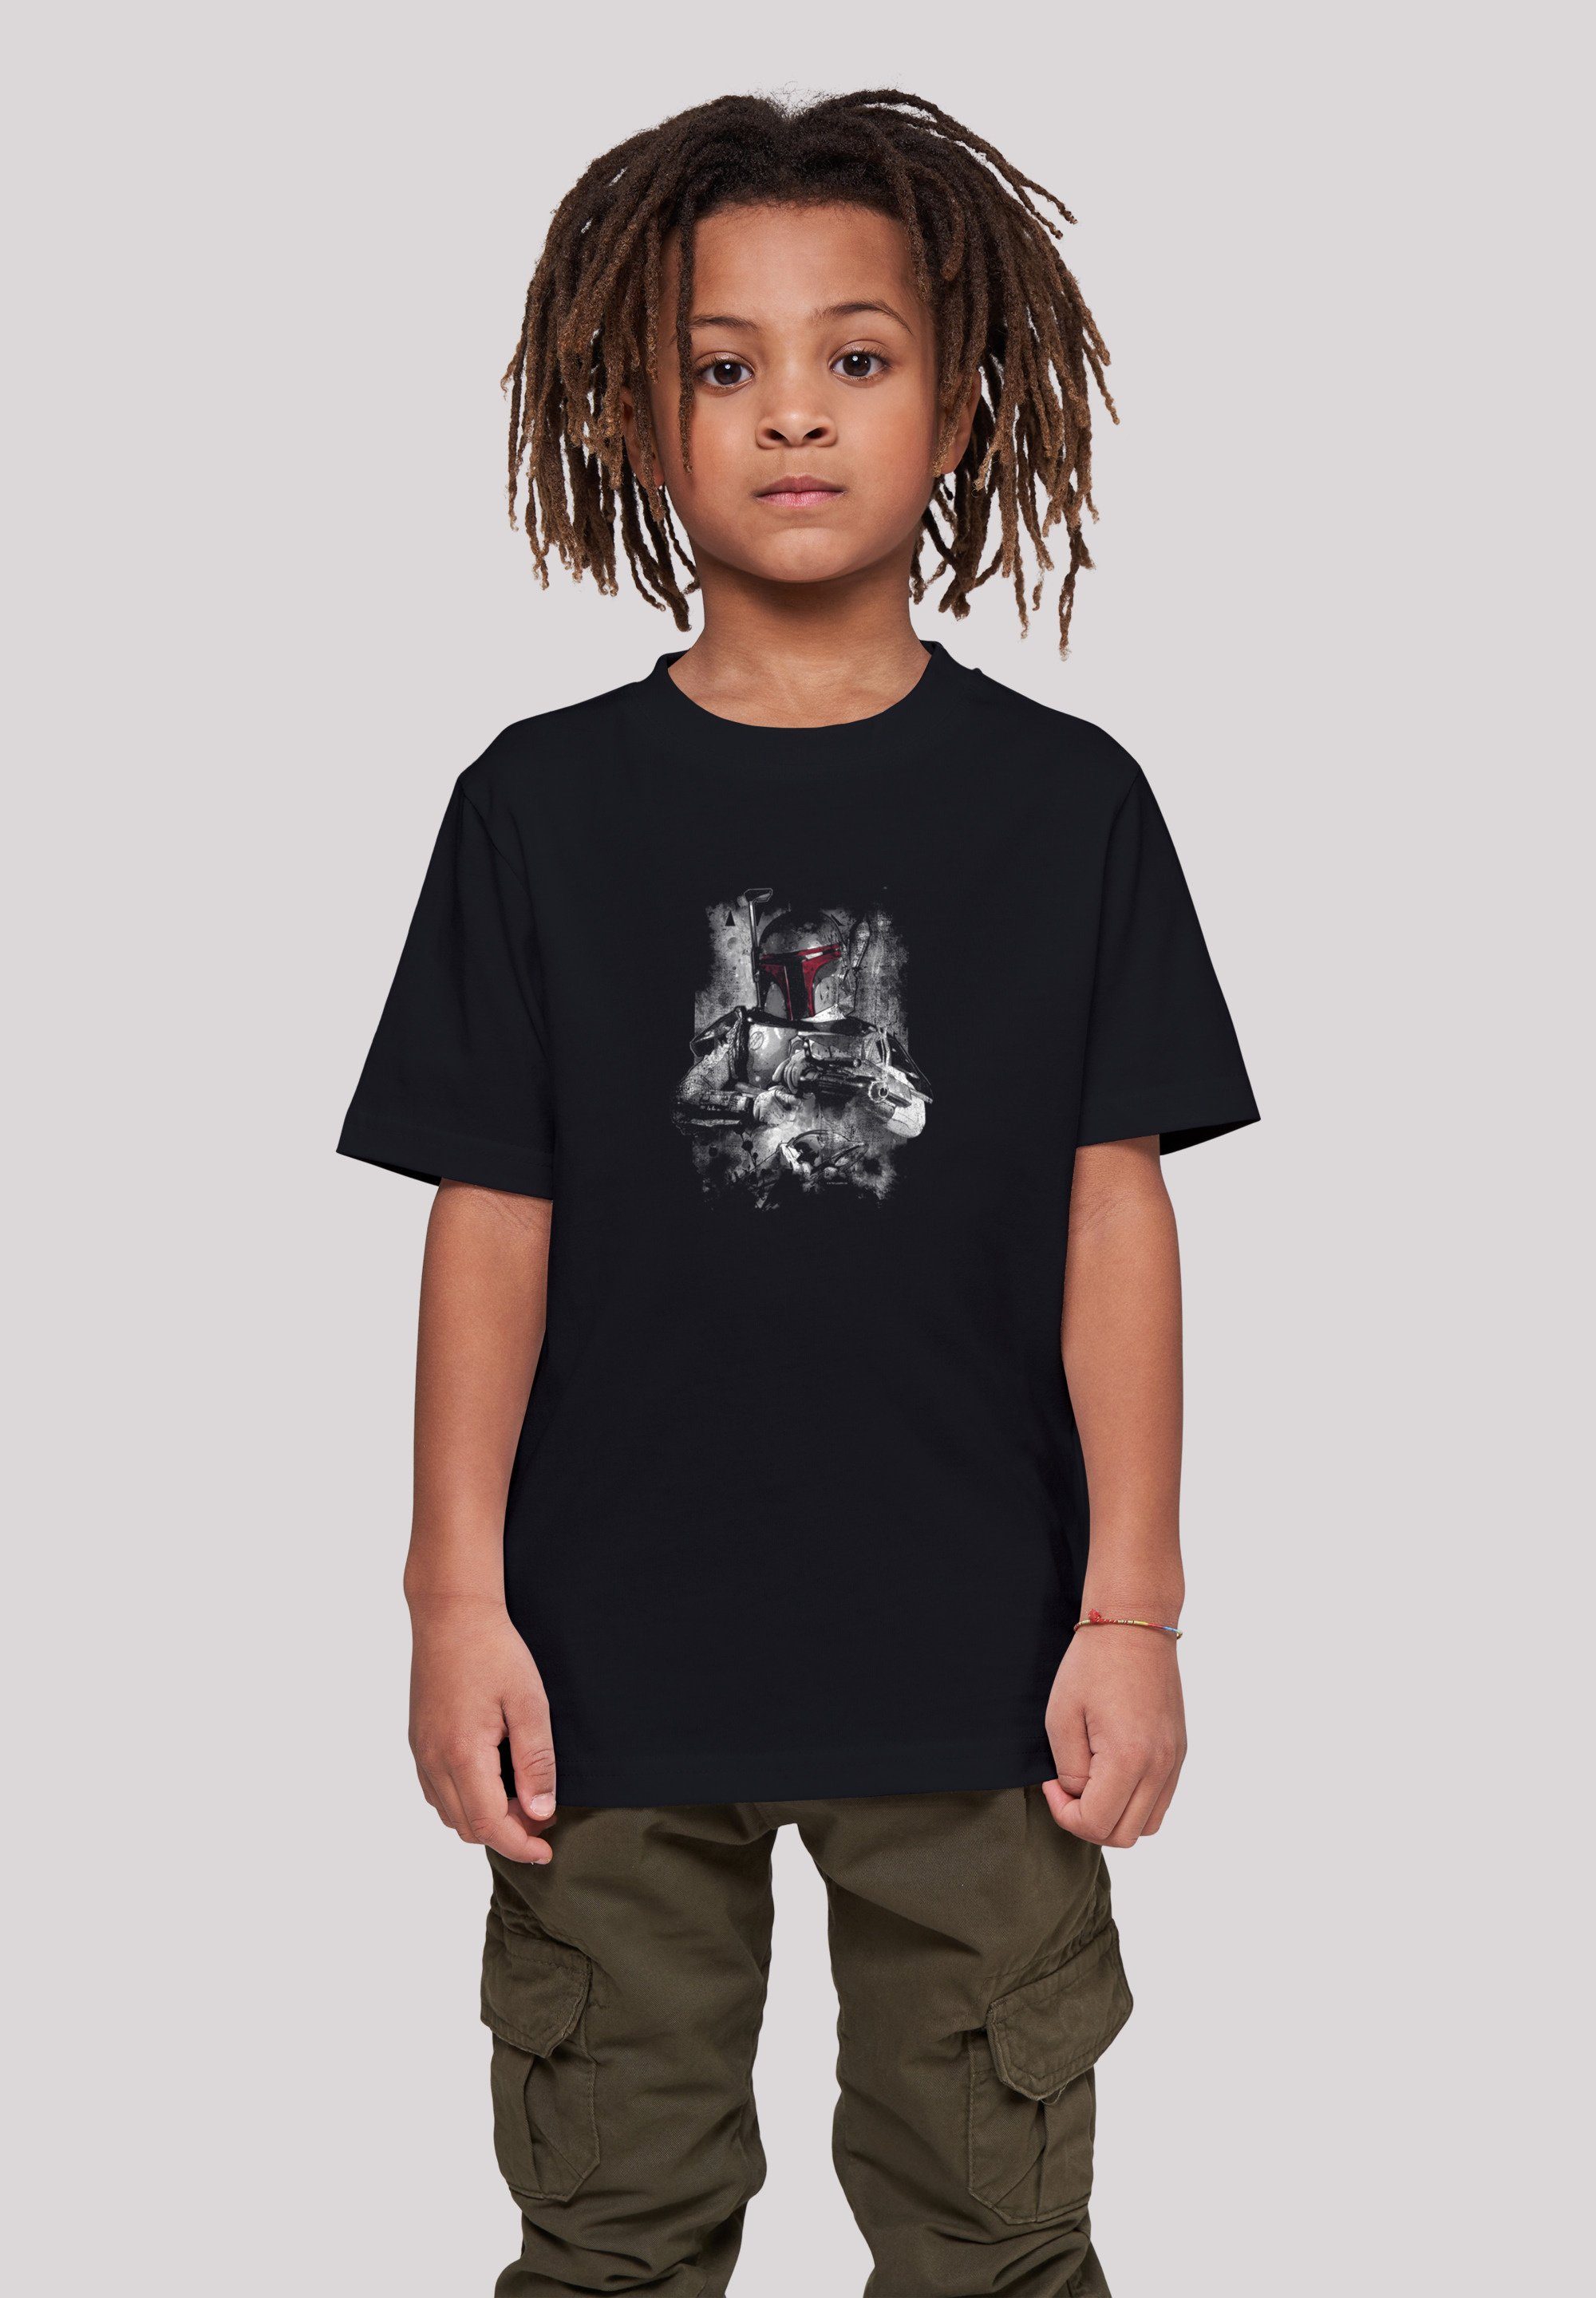 Print, hohem T-Shirt Boba mit Sehr Star F4NT4STIC weicher Distressed Baumwollstoff Tragekomfort Fett Wars